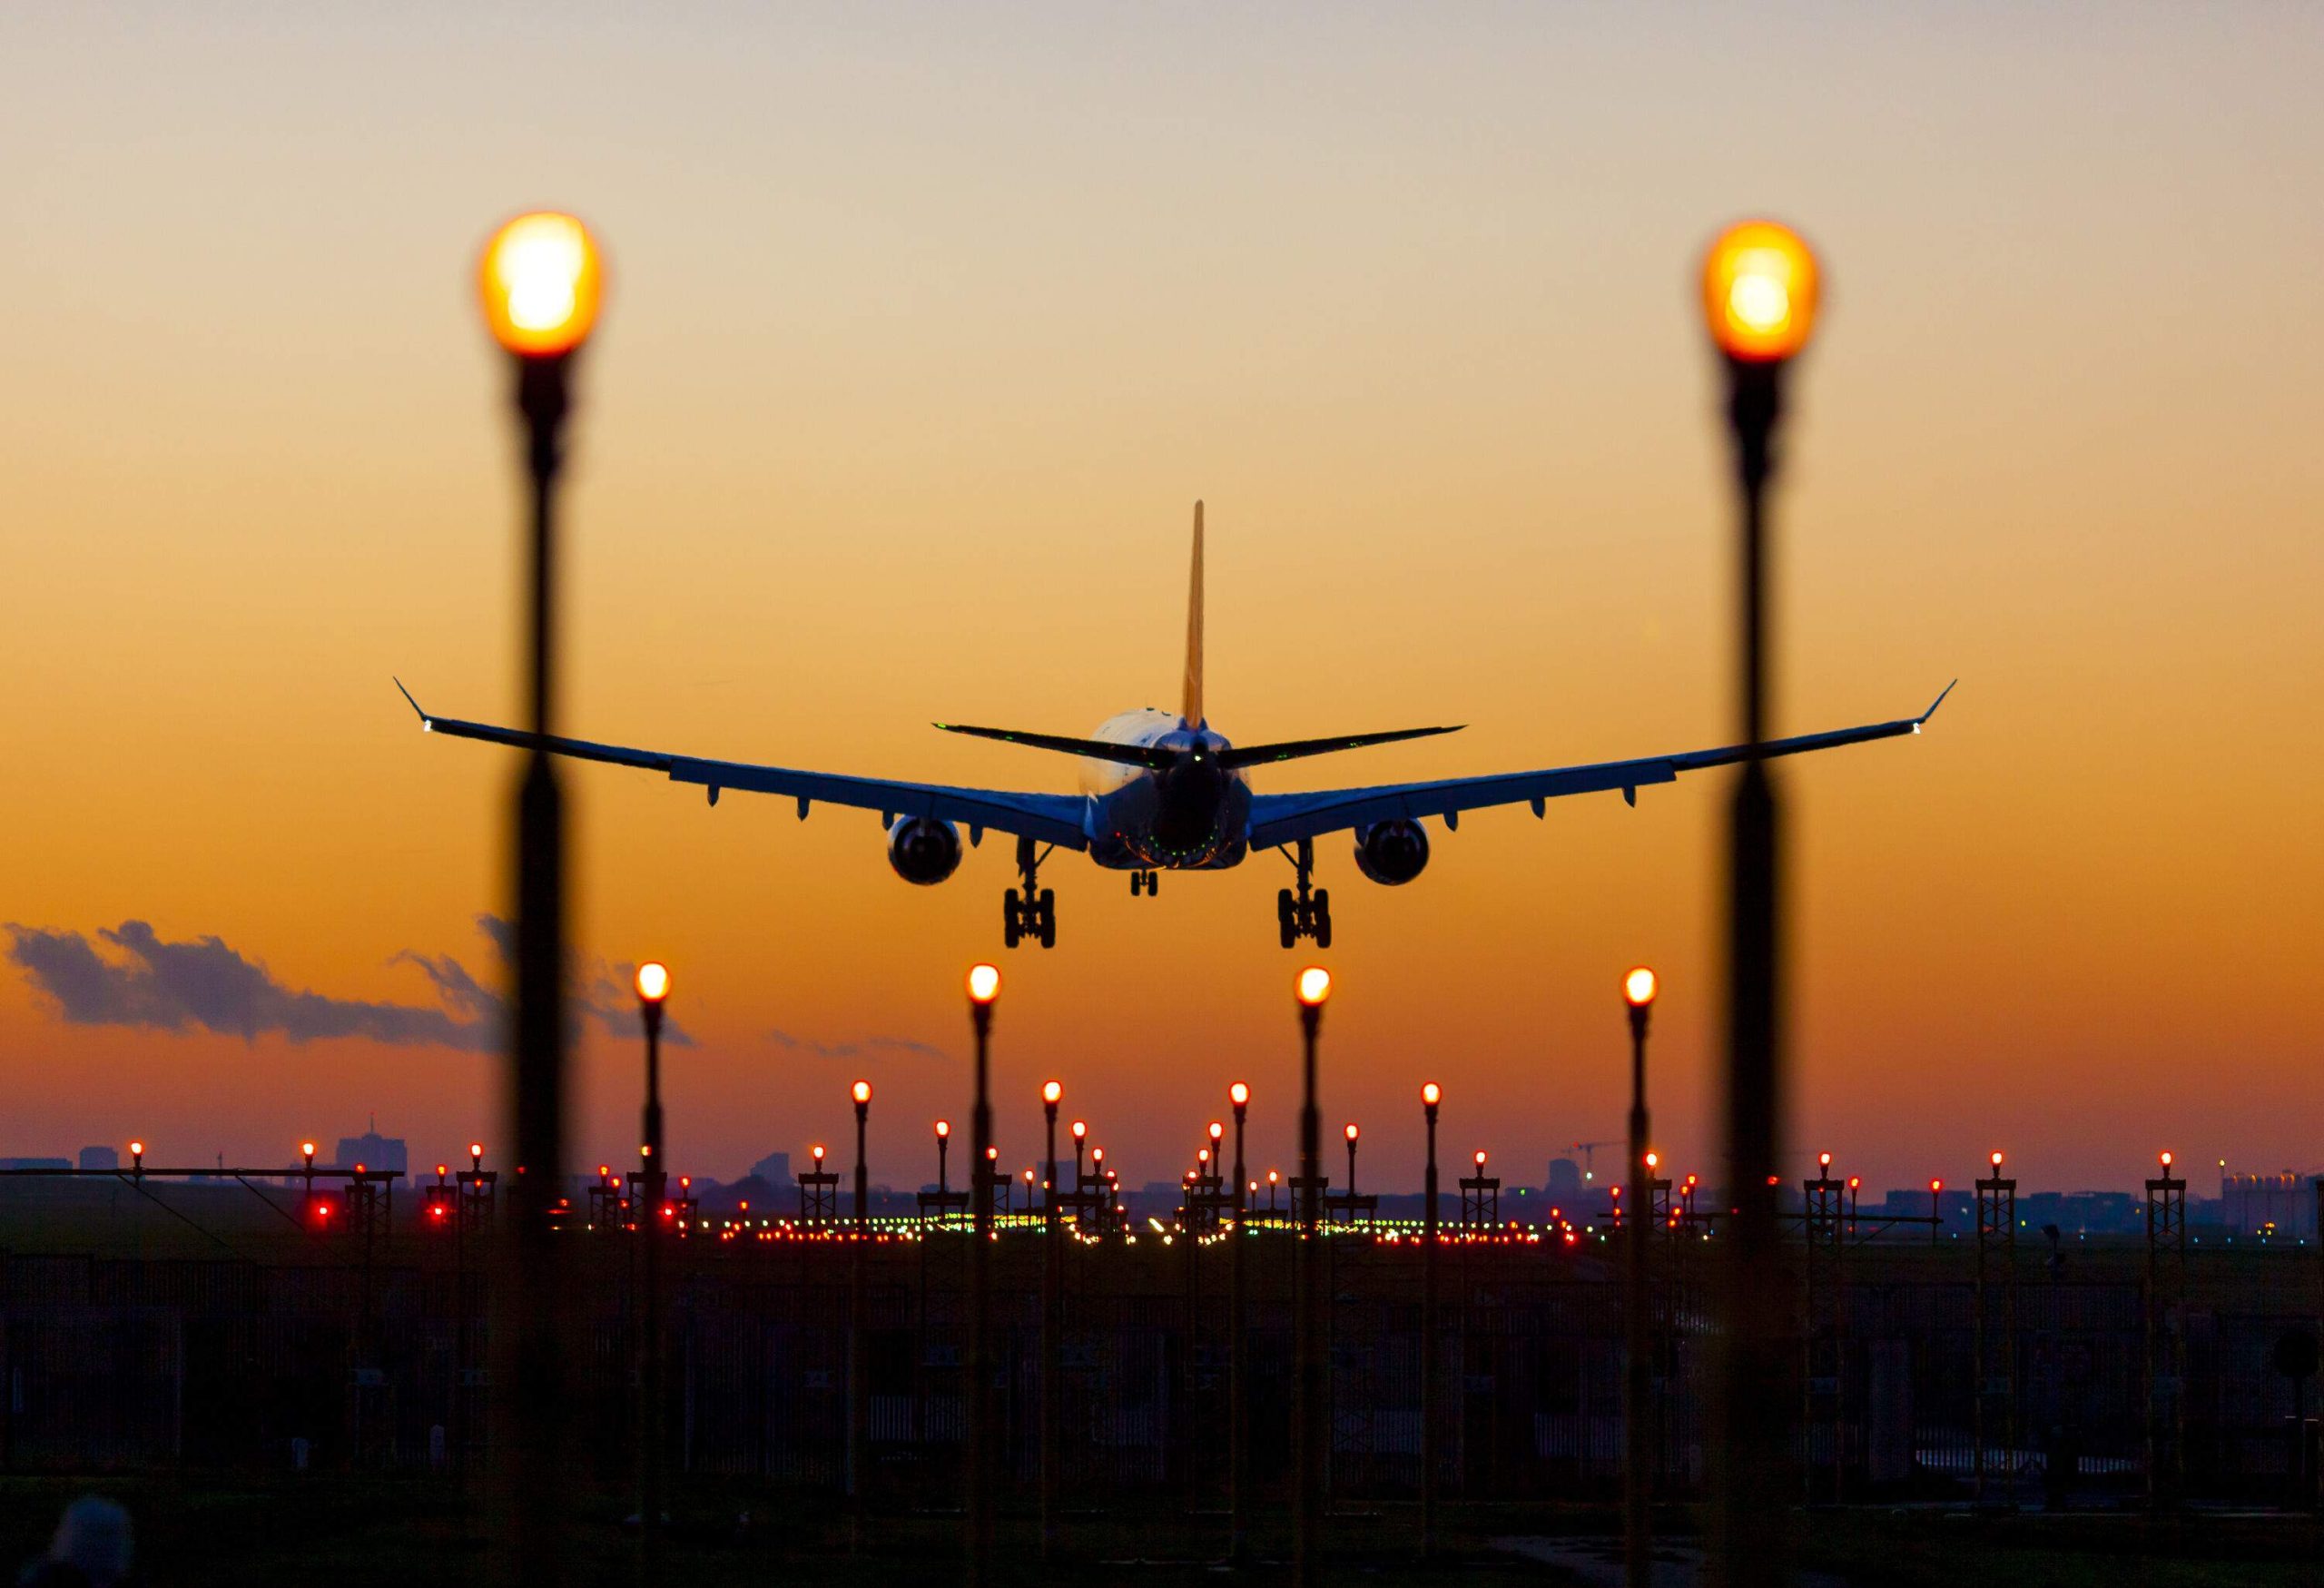 Captivating sunset landing with rows of mesmerising lights illuminating the runway.